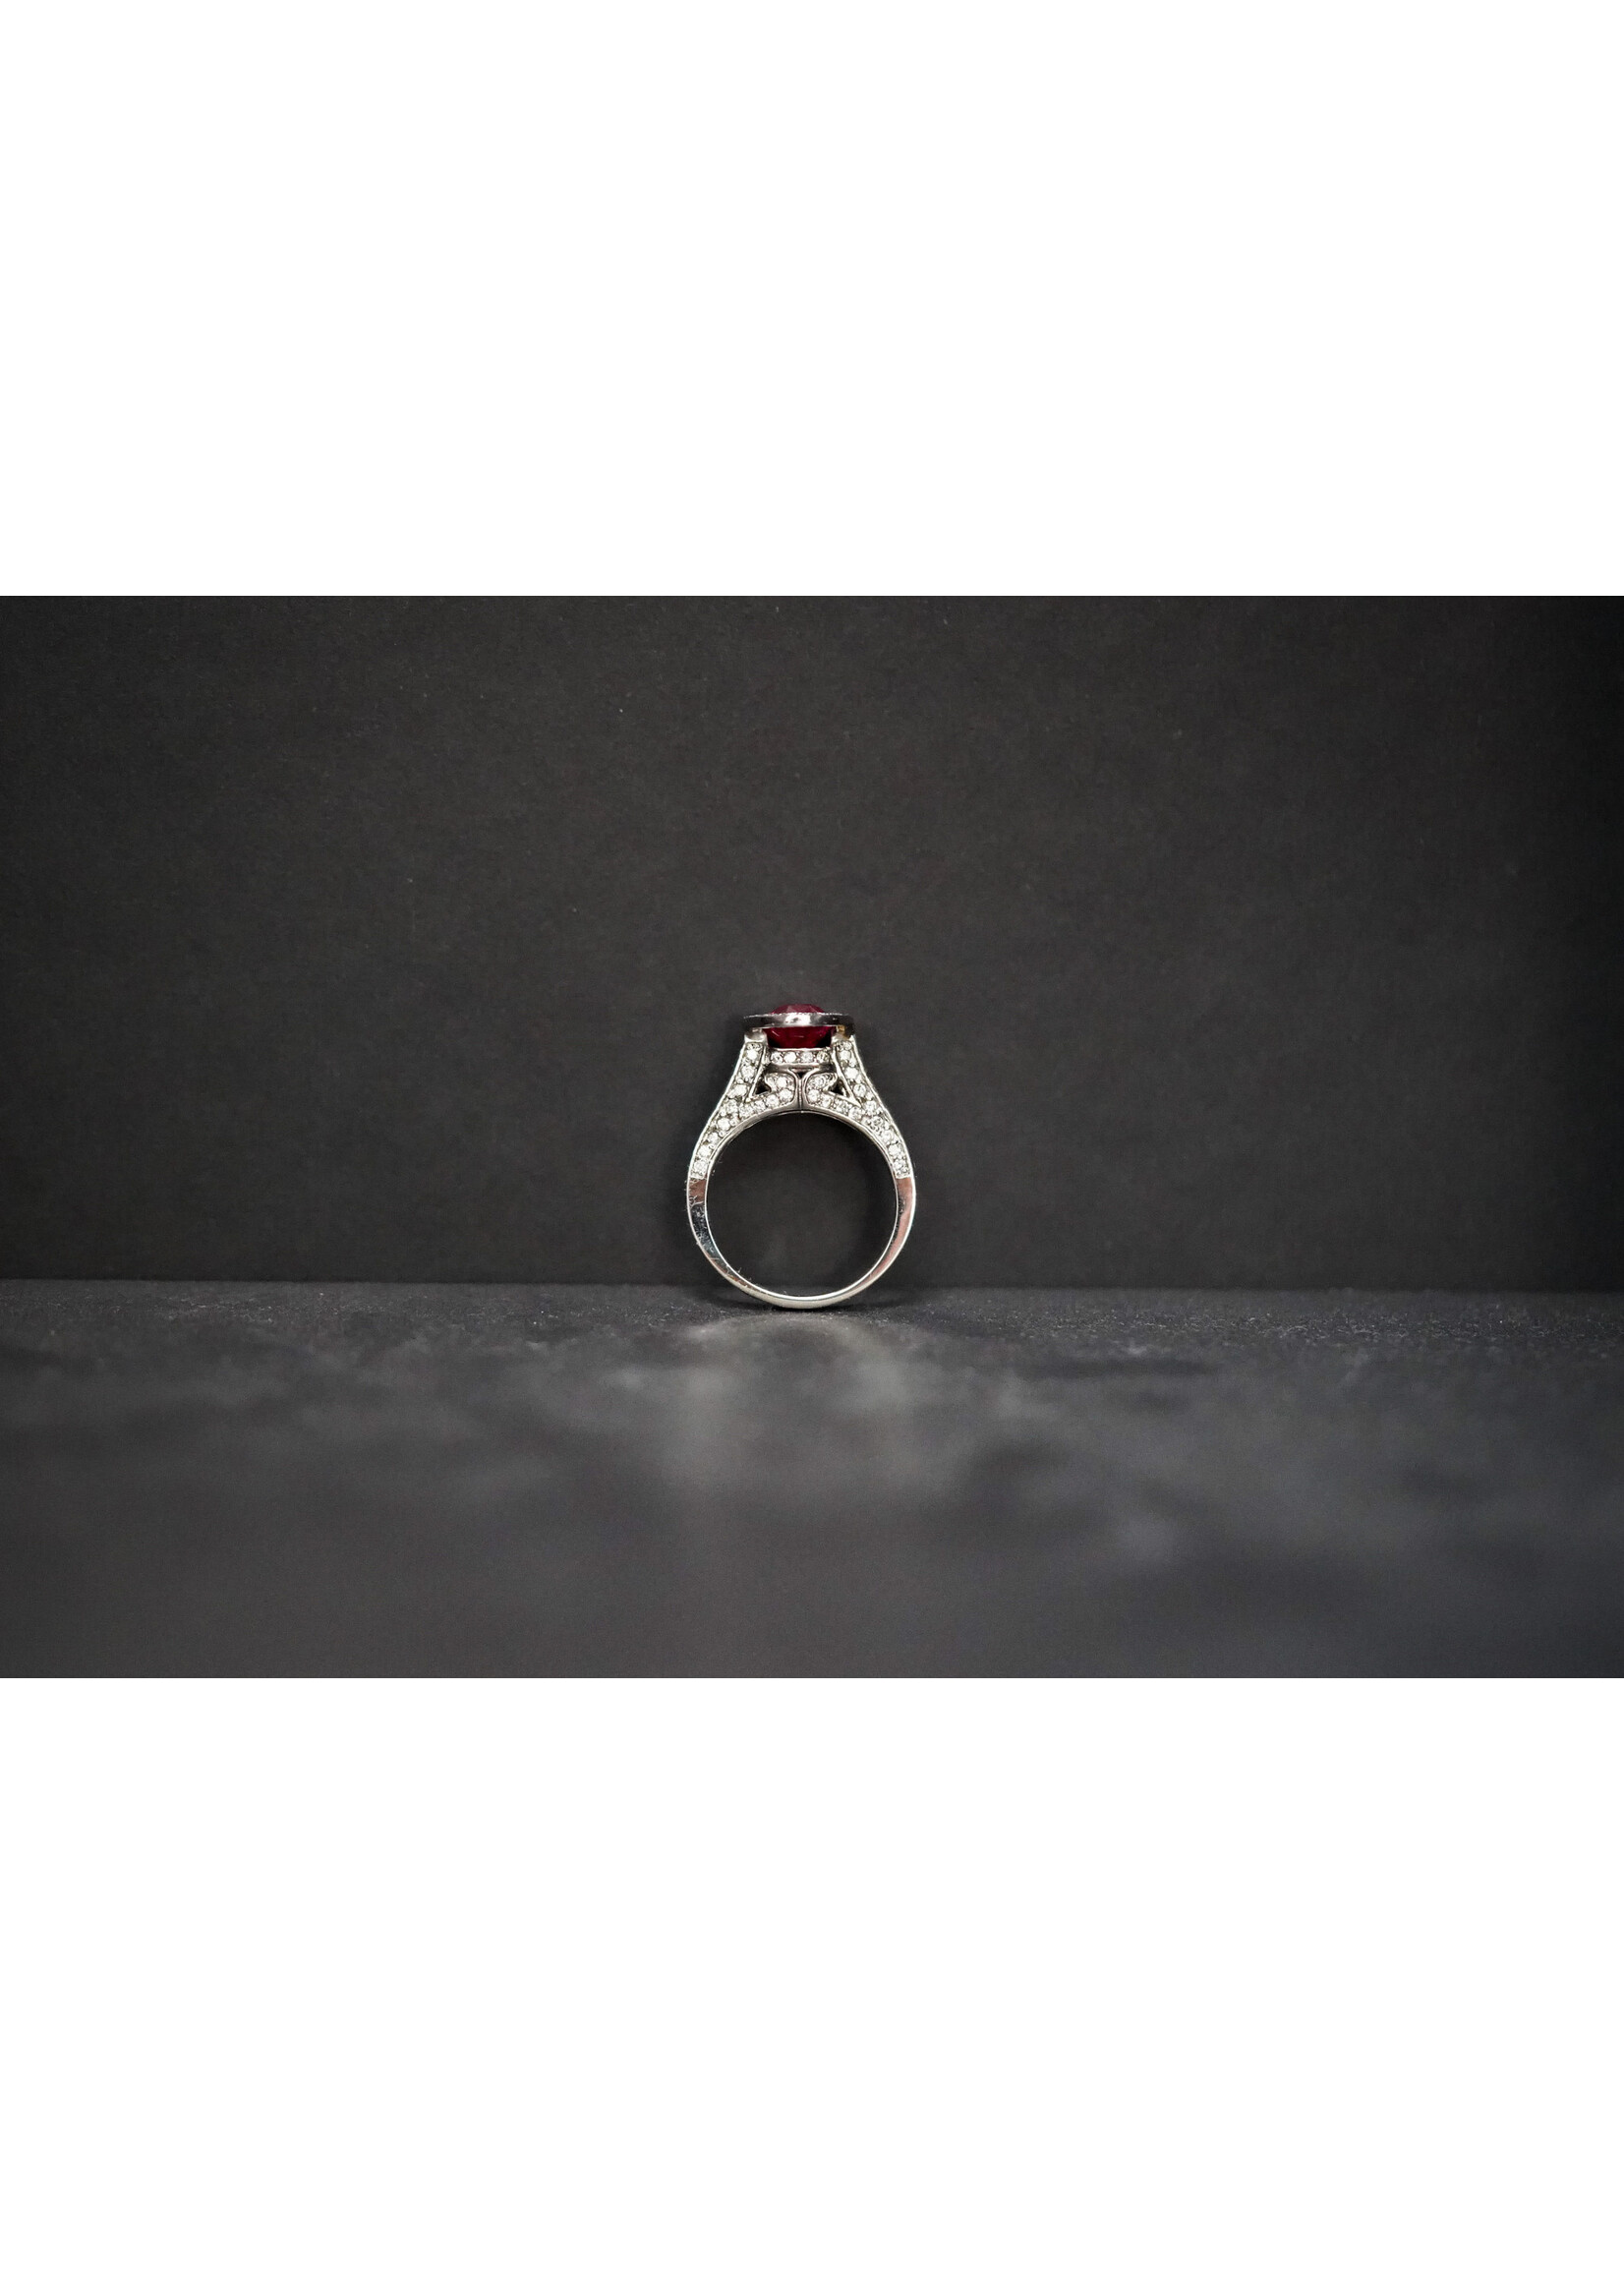 14KW 4.8g 2.05ctw (1.60ctr) Ruby & Diamond Halo Fashion Ring (size 6)